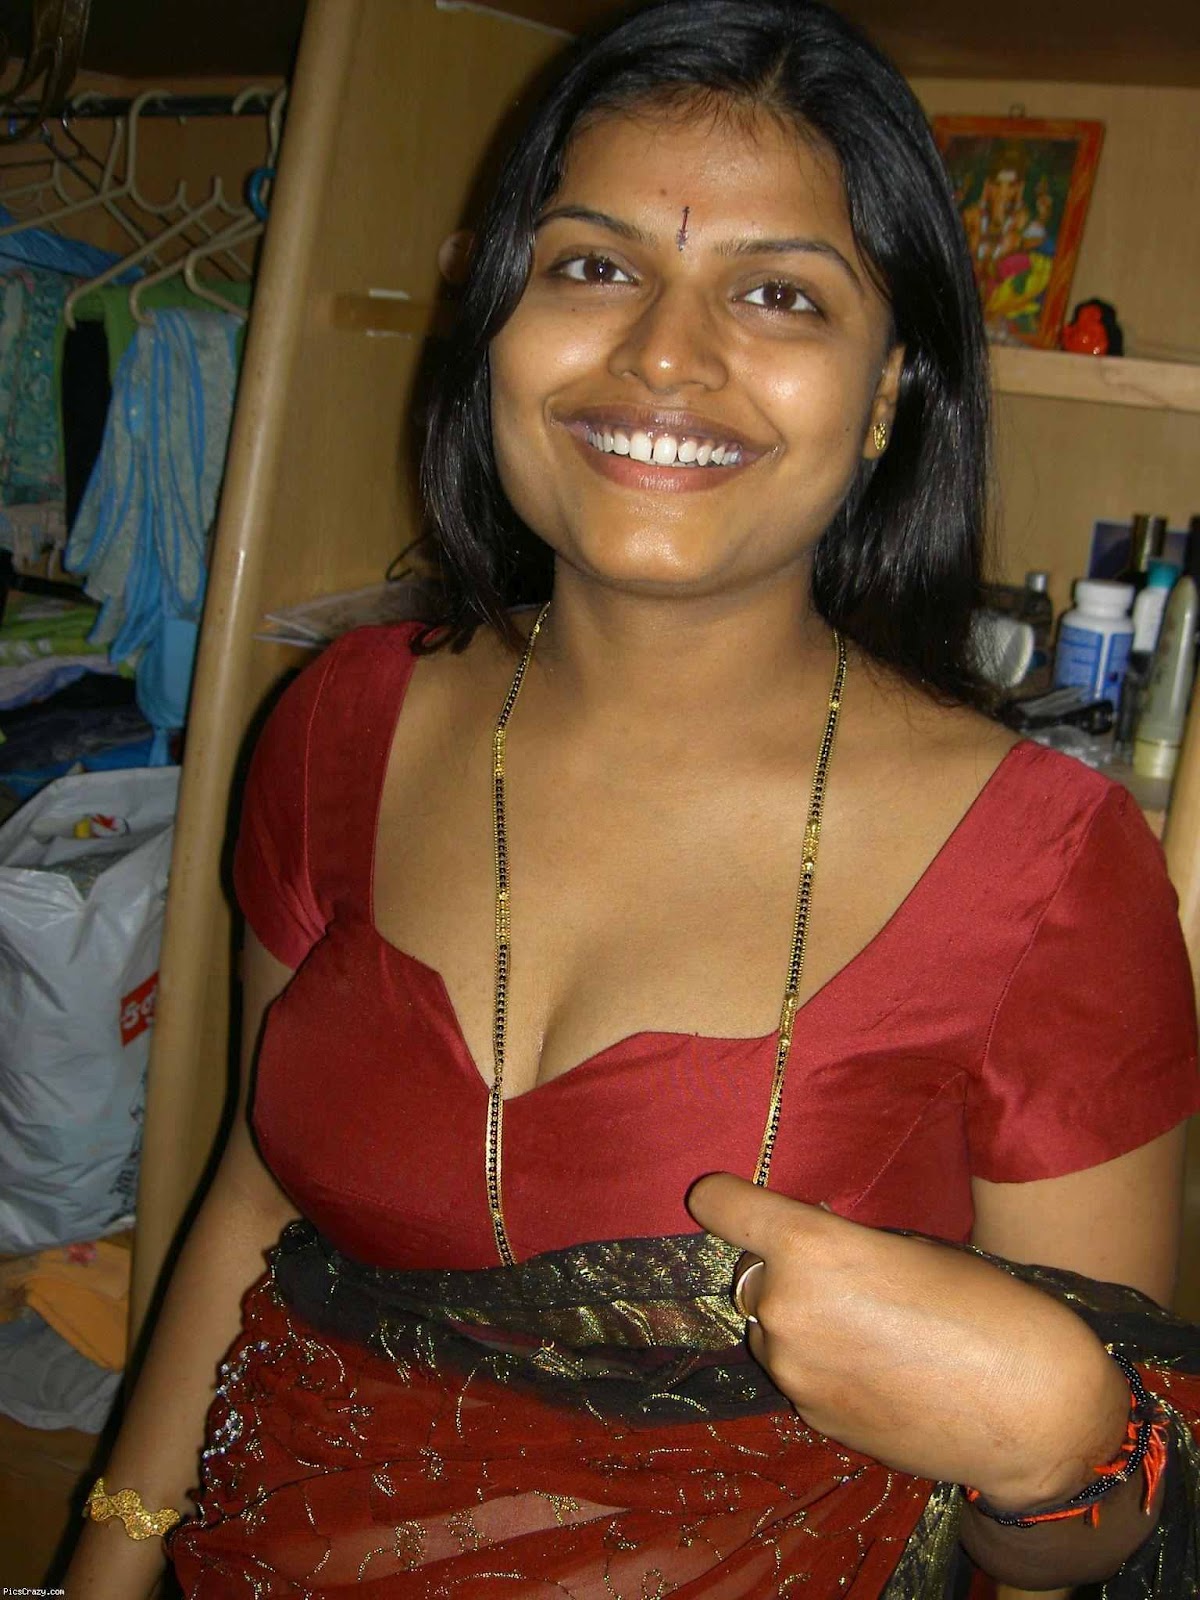 Image sex in Chennai of village girls